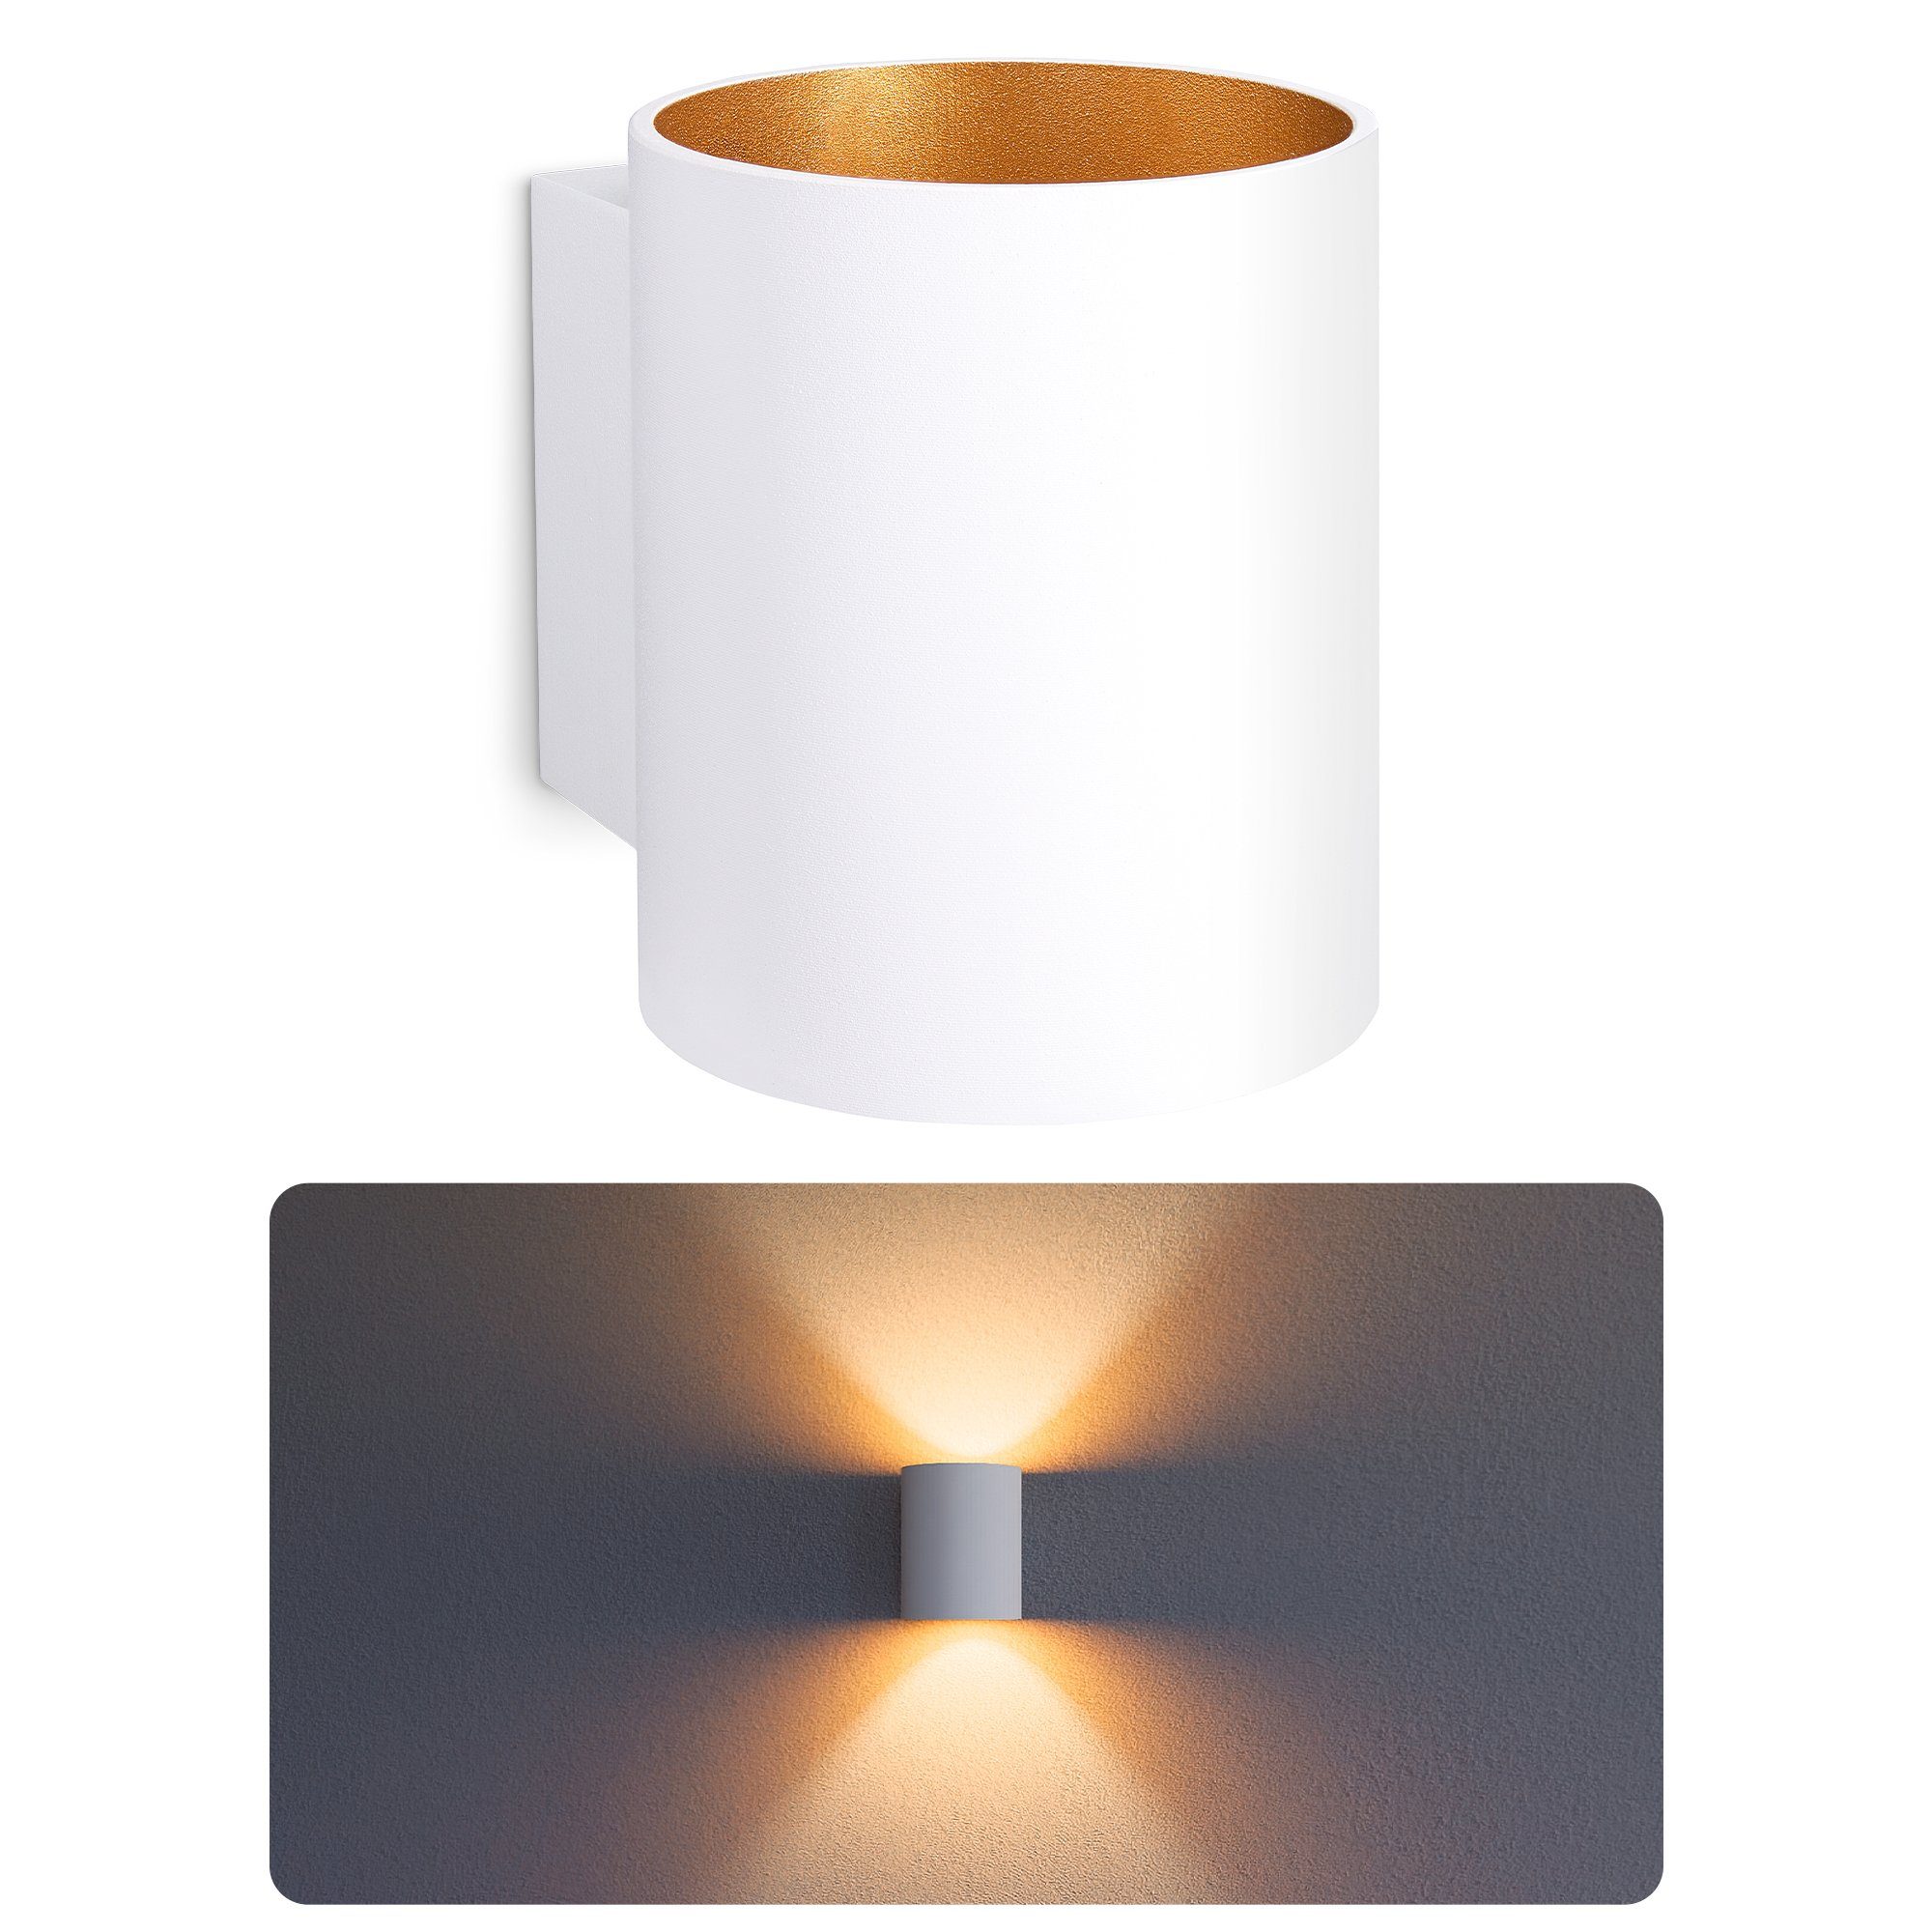 SSC-LUXon Up warmweiß, mit gold LED Wandleuchte Wandlampe Warmweiß weiß Down G9 & TUANI LED 2W